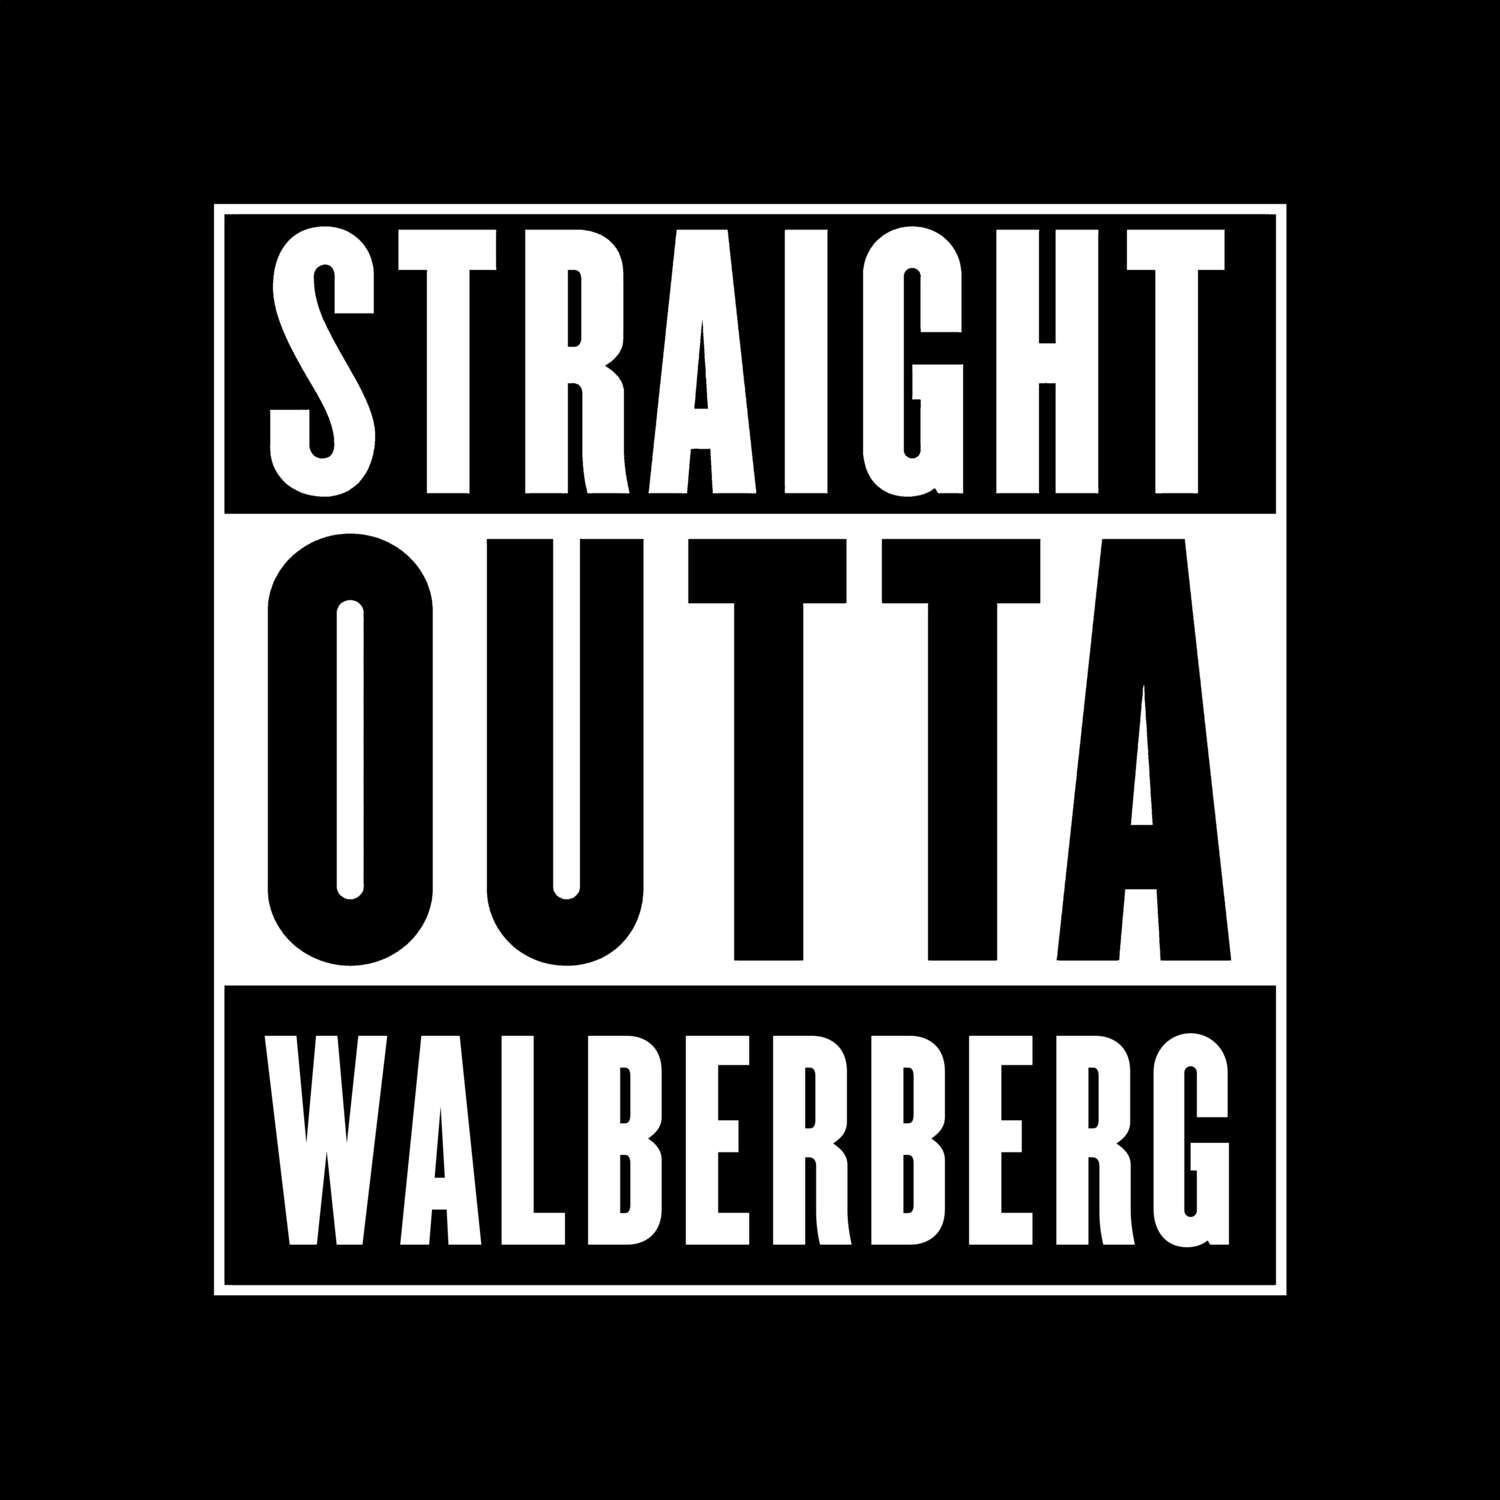 Walberberg T-Shirt »Straight Outta«